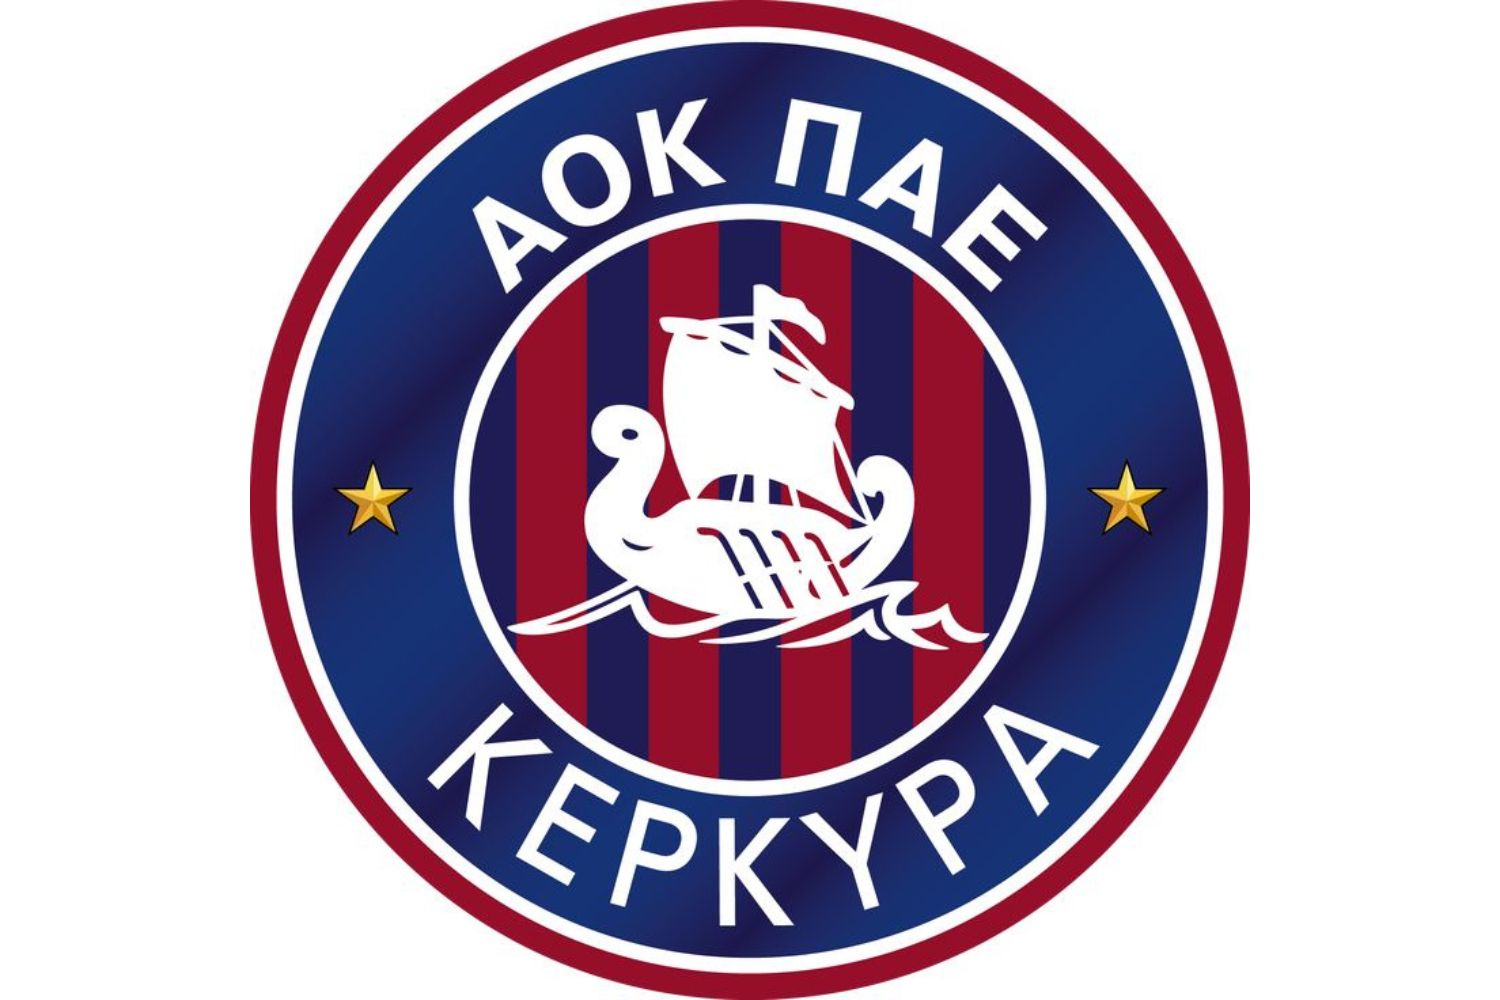 aok-kerkyra-23-football-club-facts